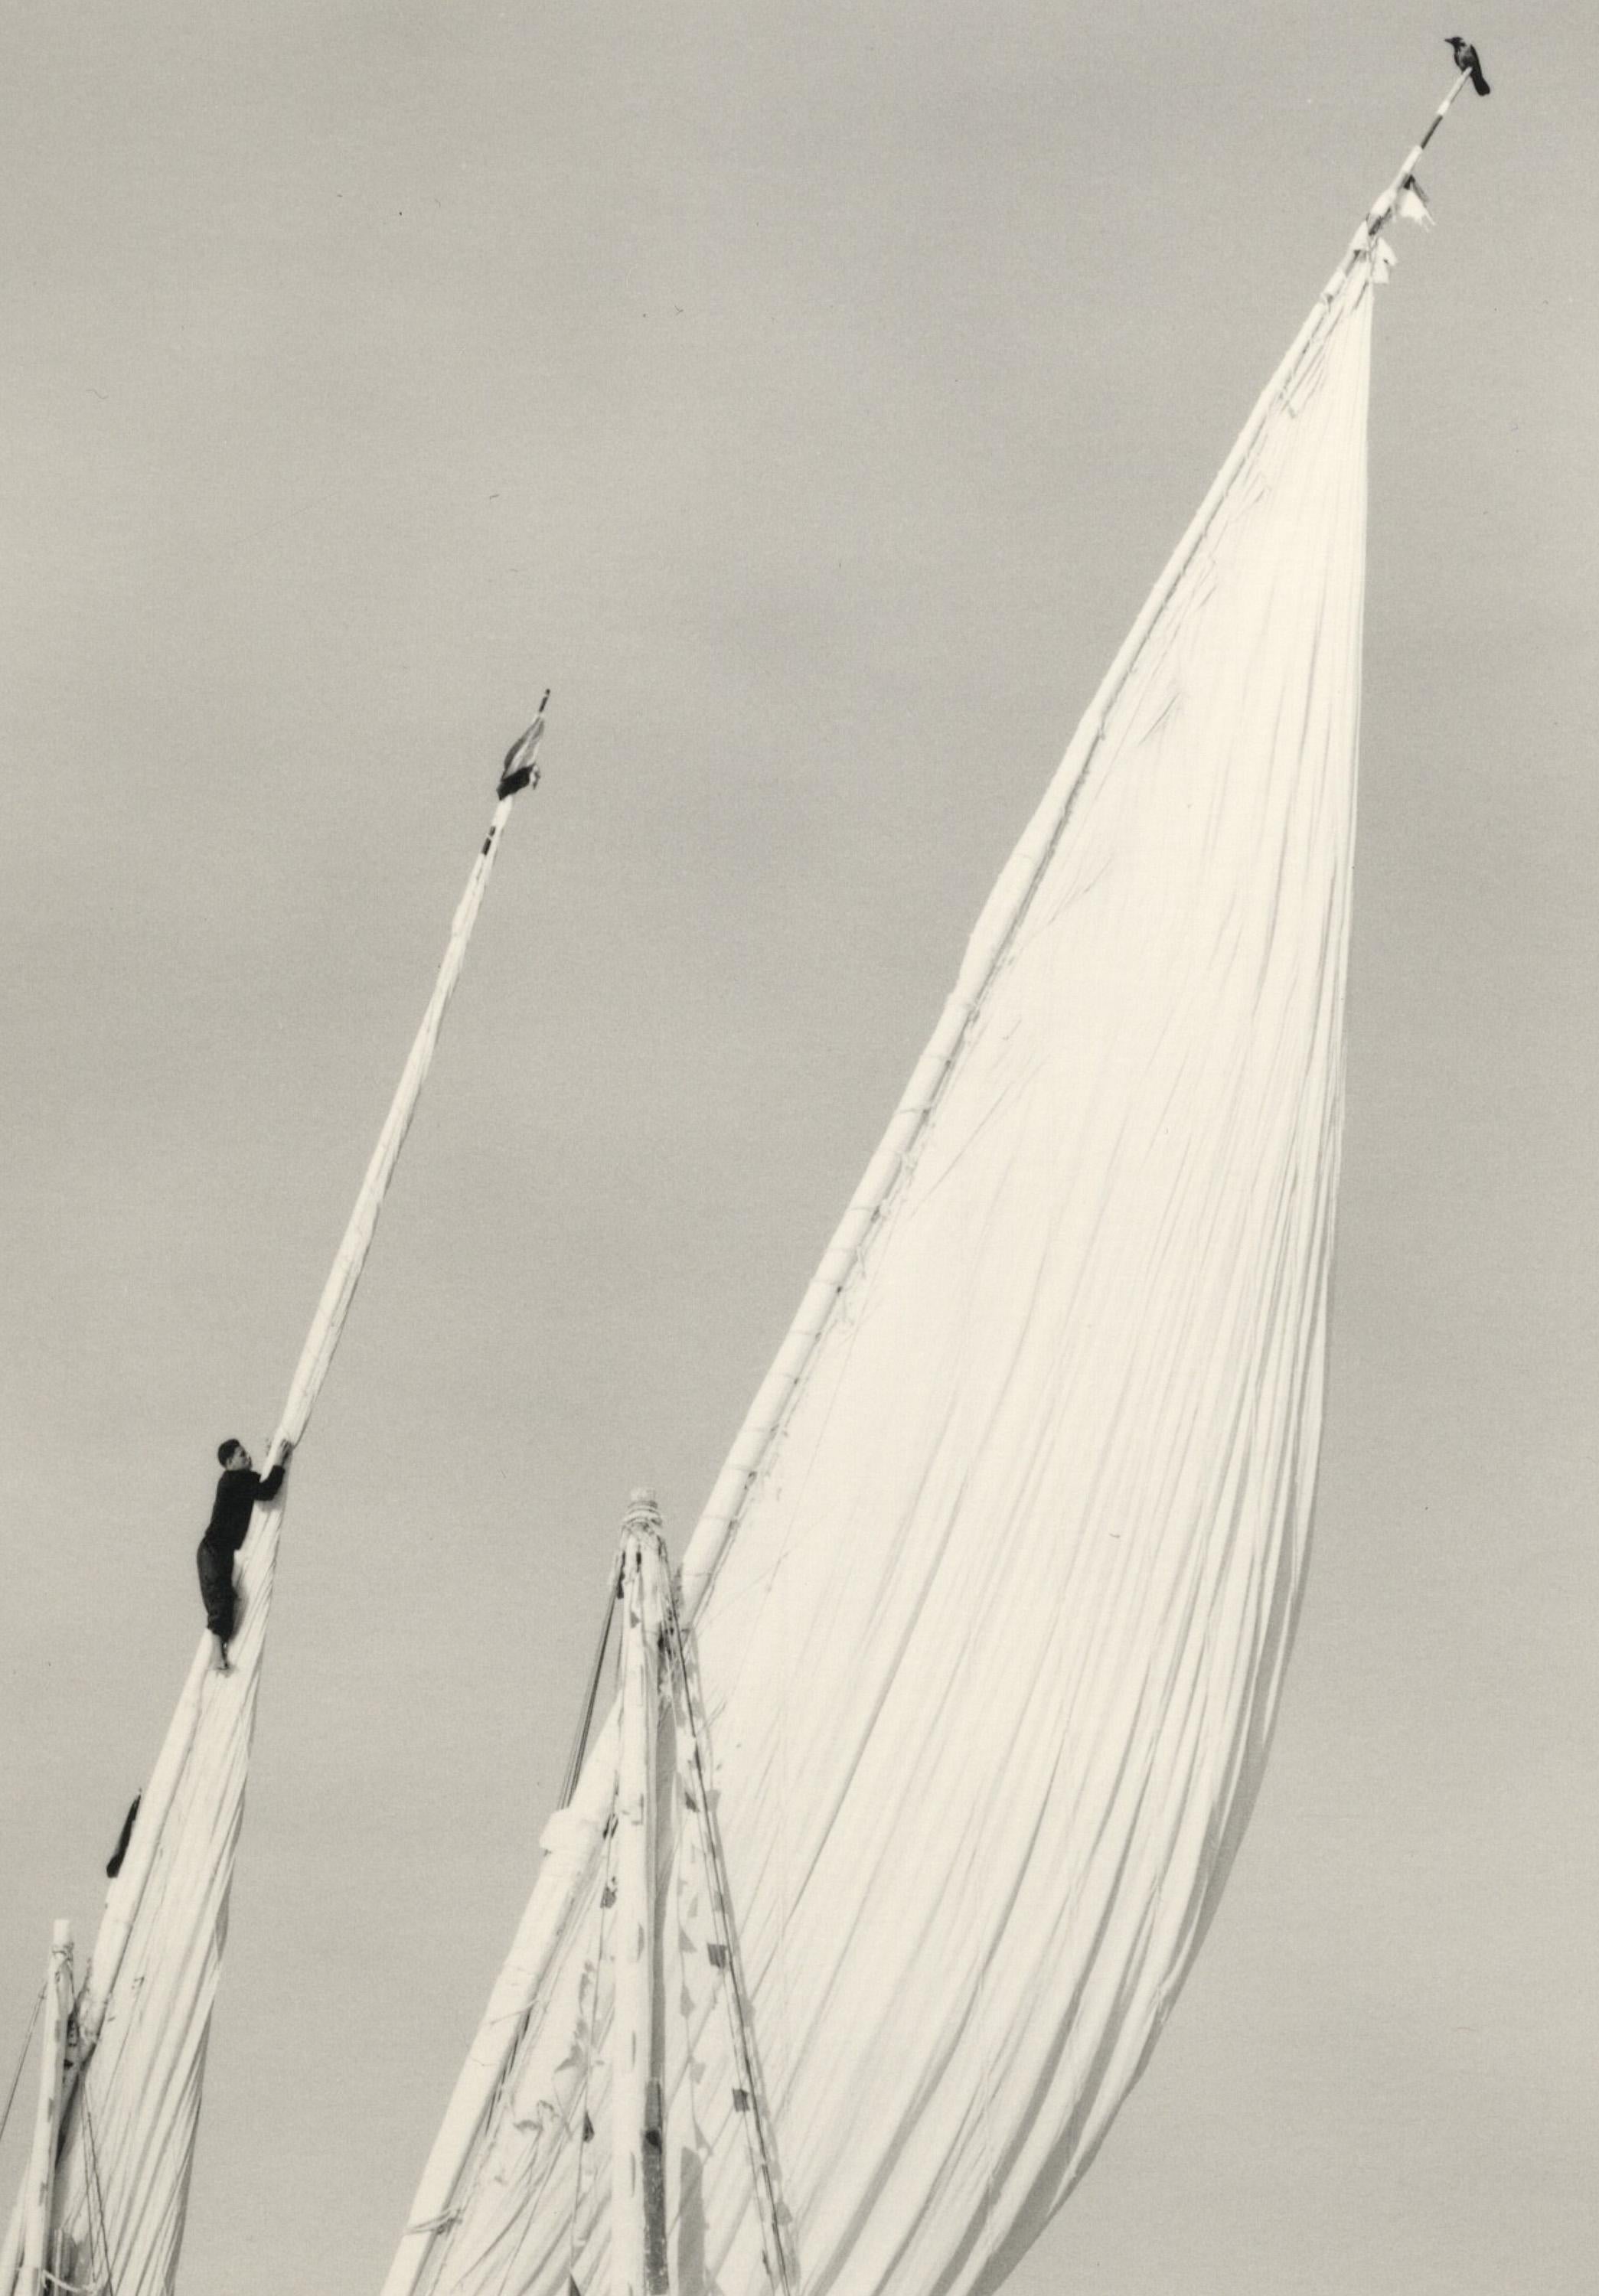 Pentti Sammallahti Black and White Photograph - Luxor, Egypt (Man climbing up the mainmast of a ship)